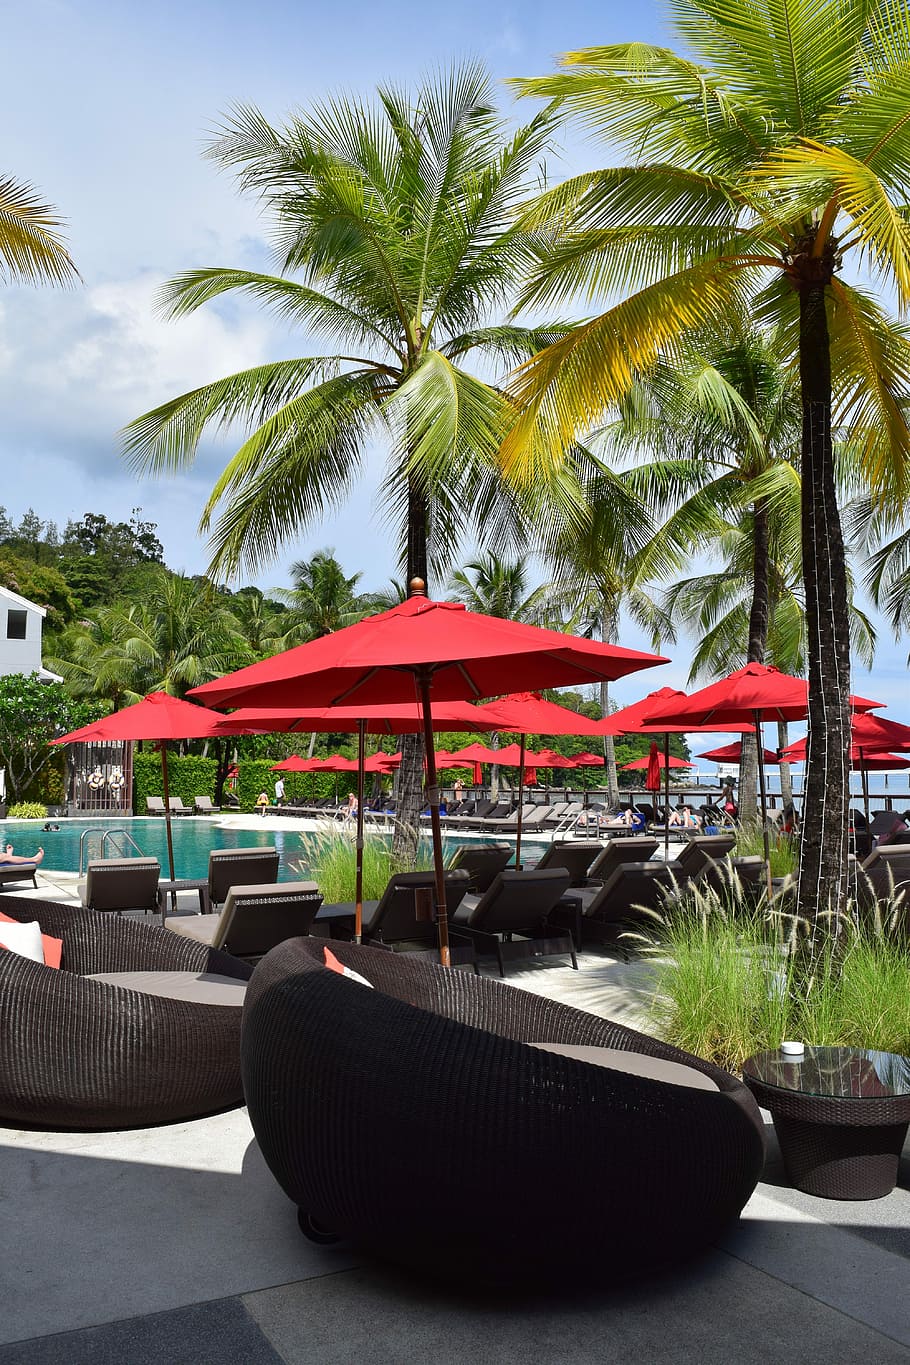 Hotel, Pohon Kelapa, Laut, Kolam, pohon palem, iklim tropis, resor wisata, liburan, pantai, hotel mewah